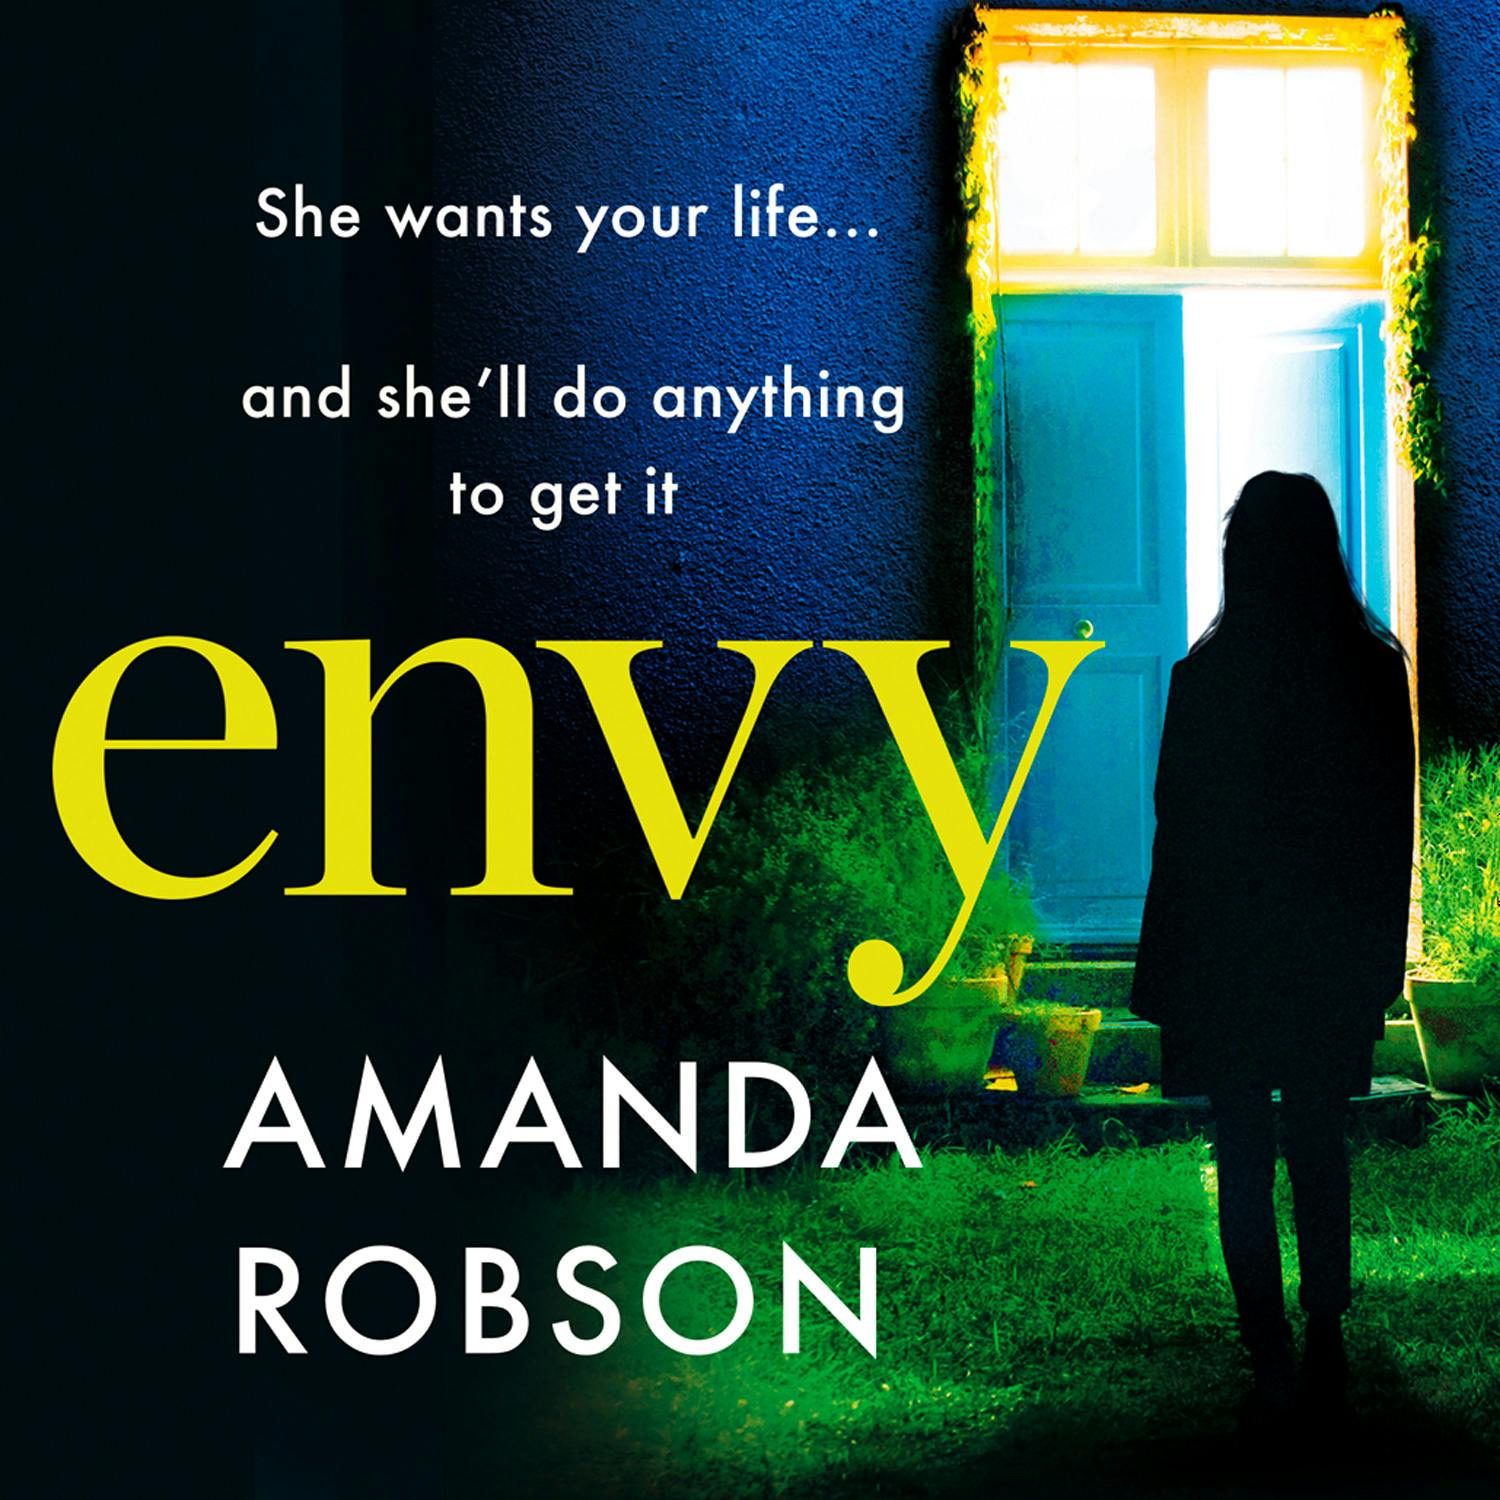 Envy - Amanda Robson